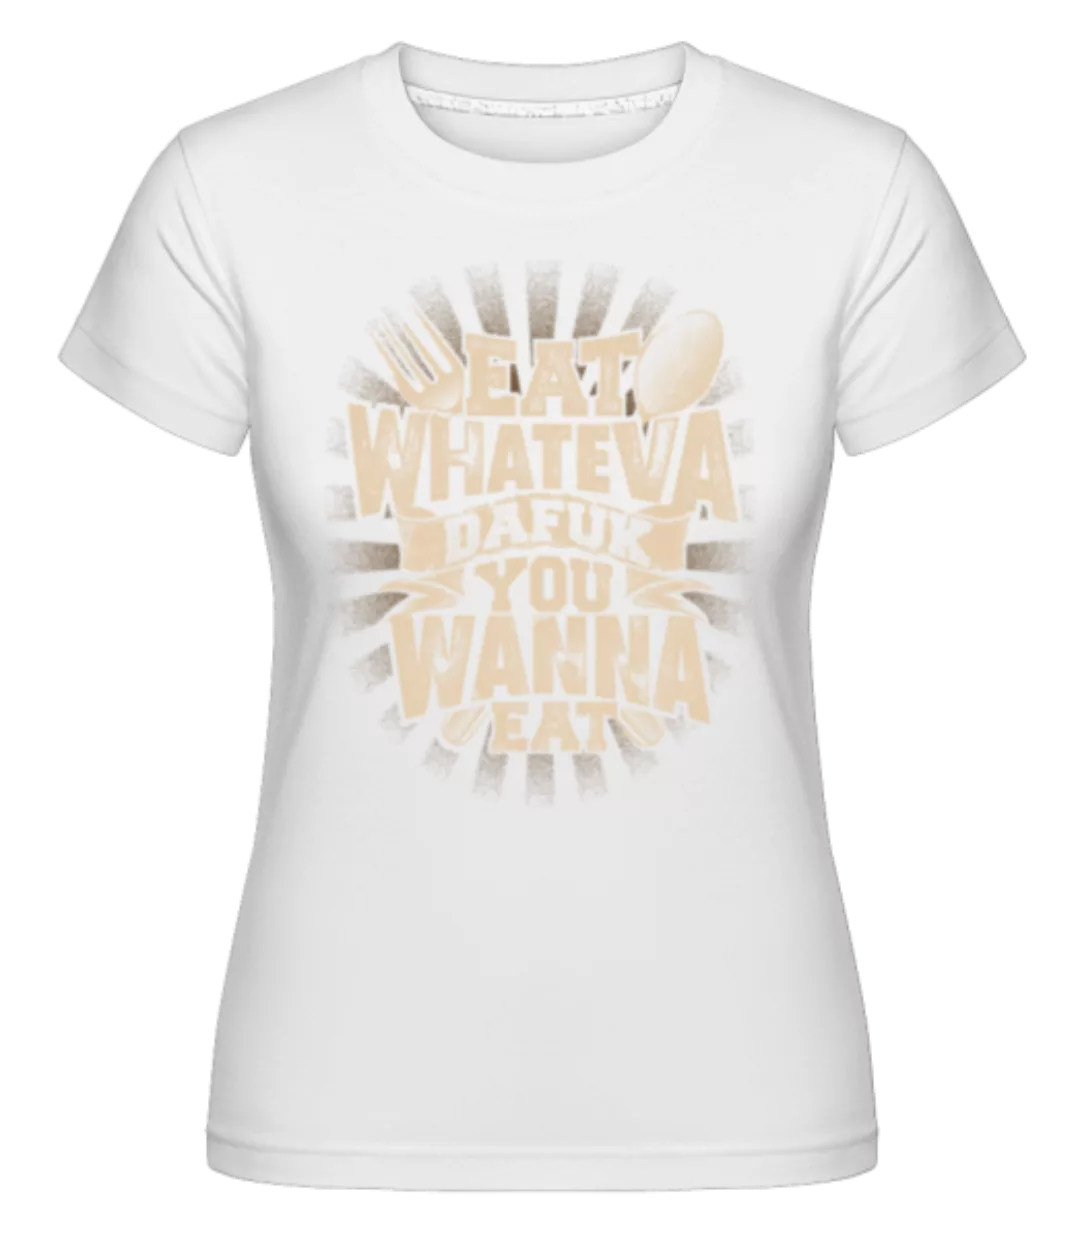 Eat Wanna Dafuk You Wanna Eat · Shirtinator Frauen T-Shirt günstig online kaufen